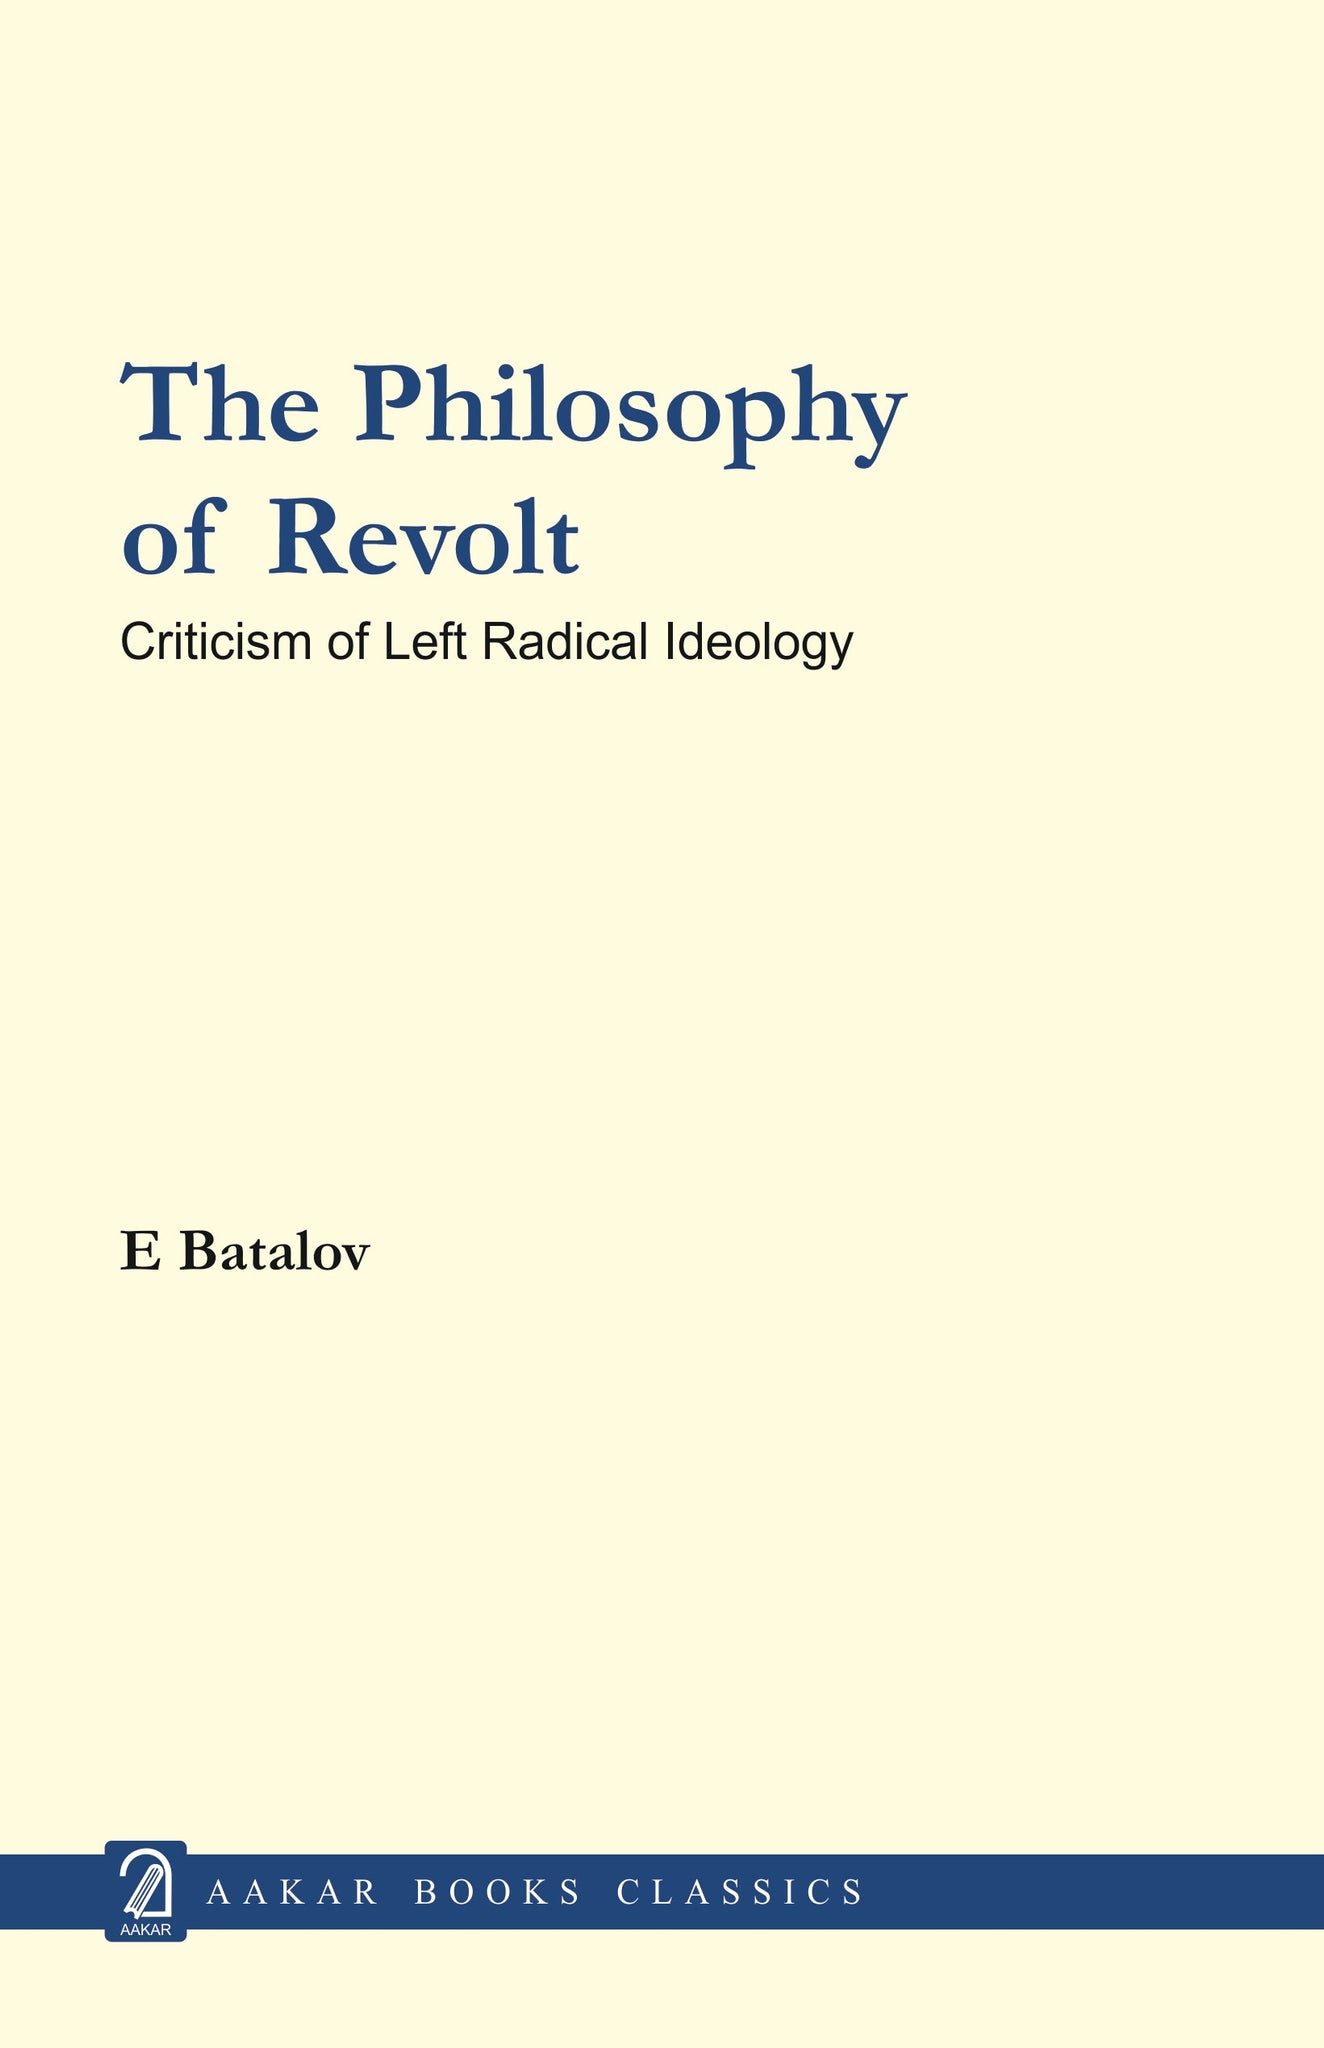 The Philosophy of Revolt: Criticism of Left Radical Ideology